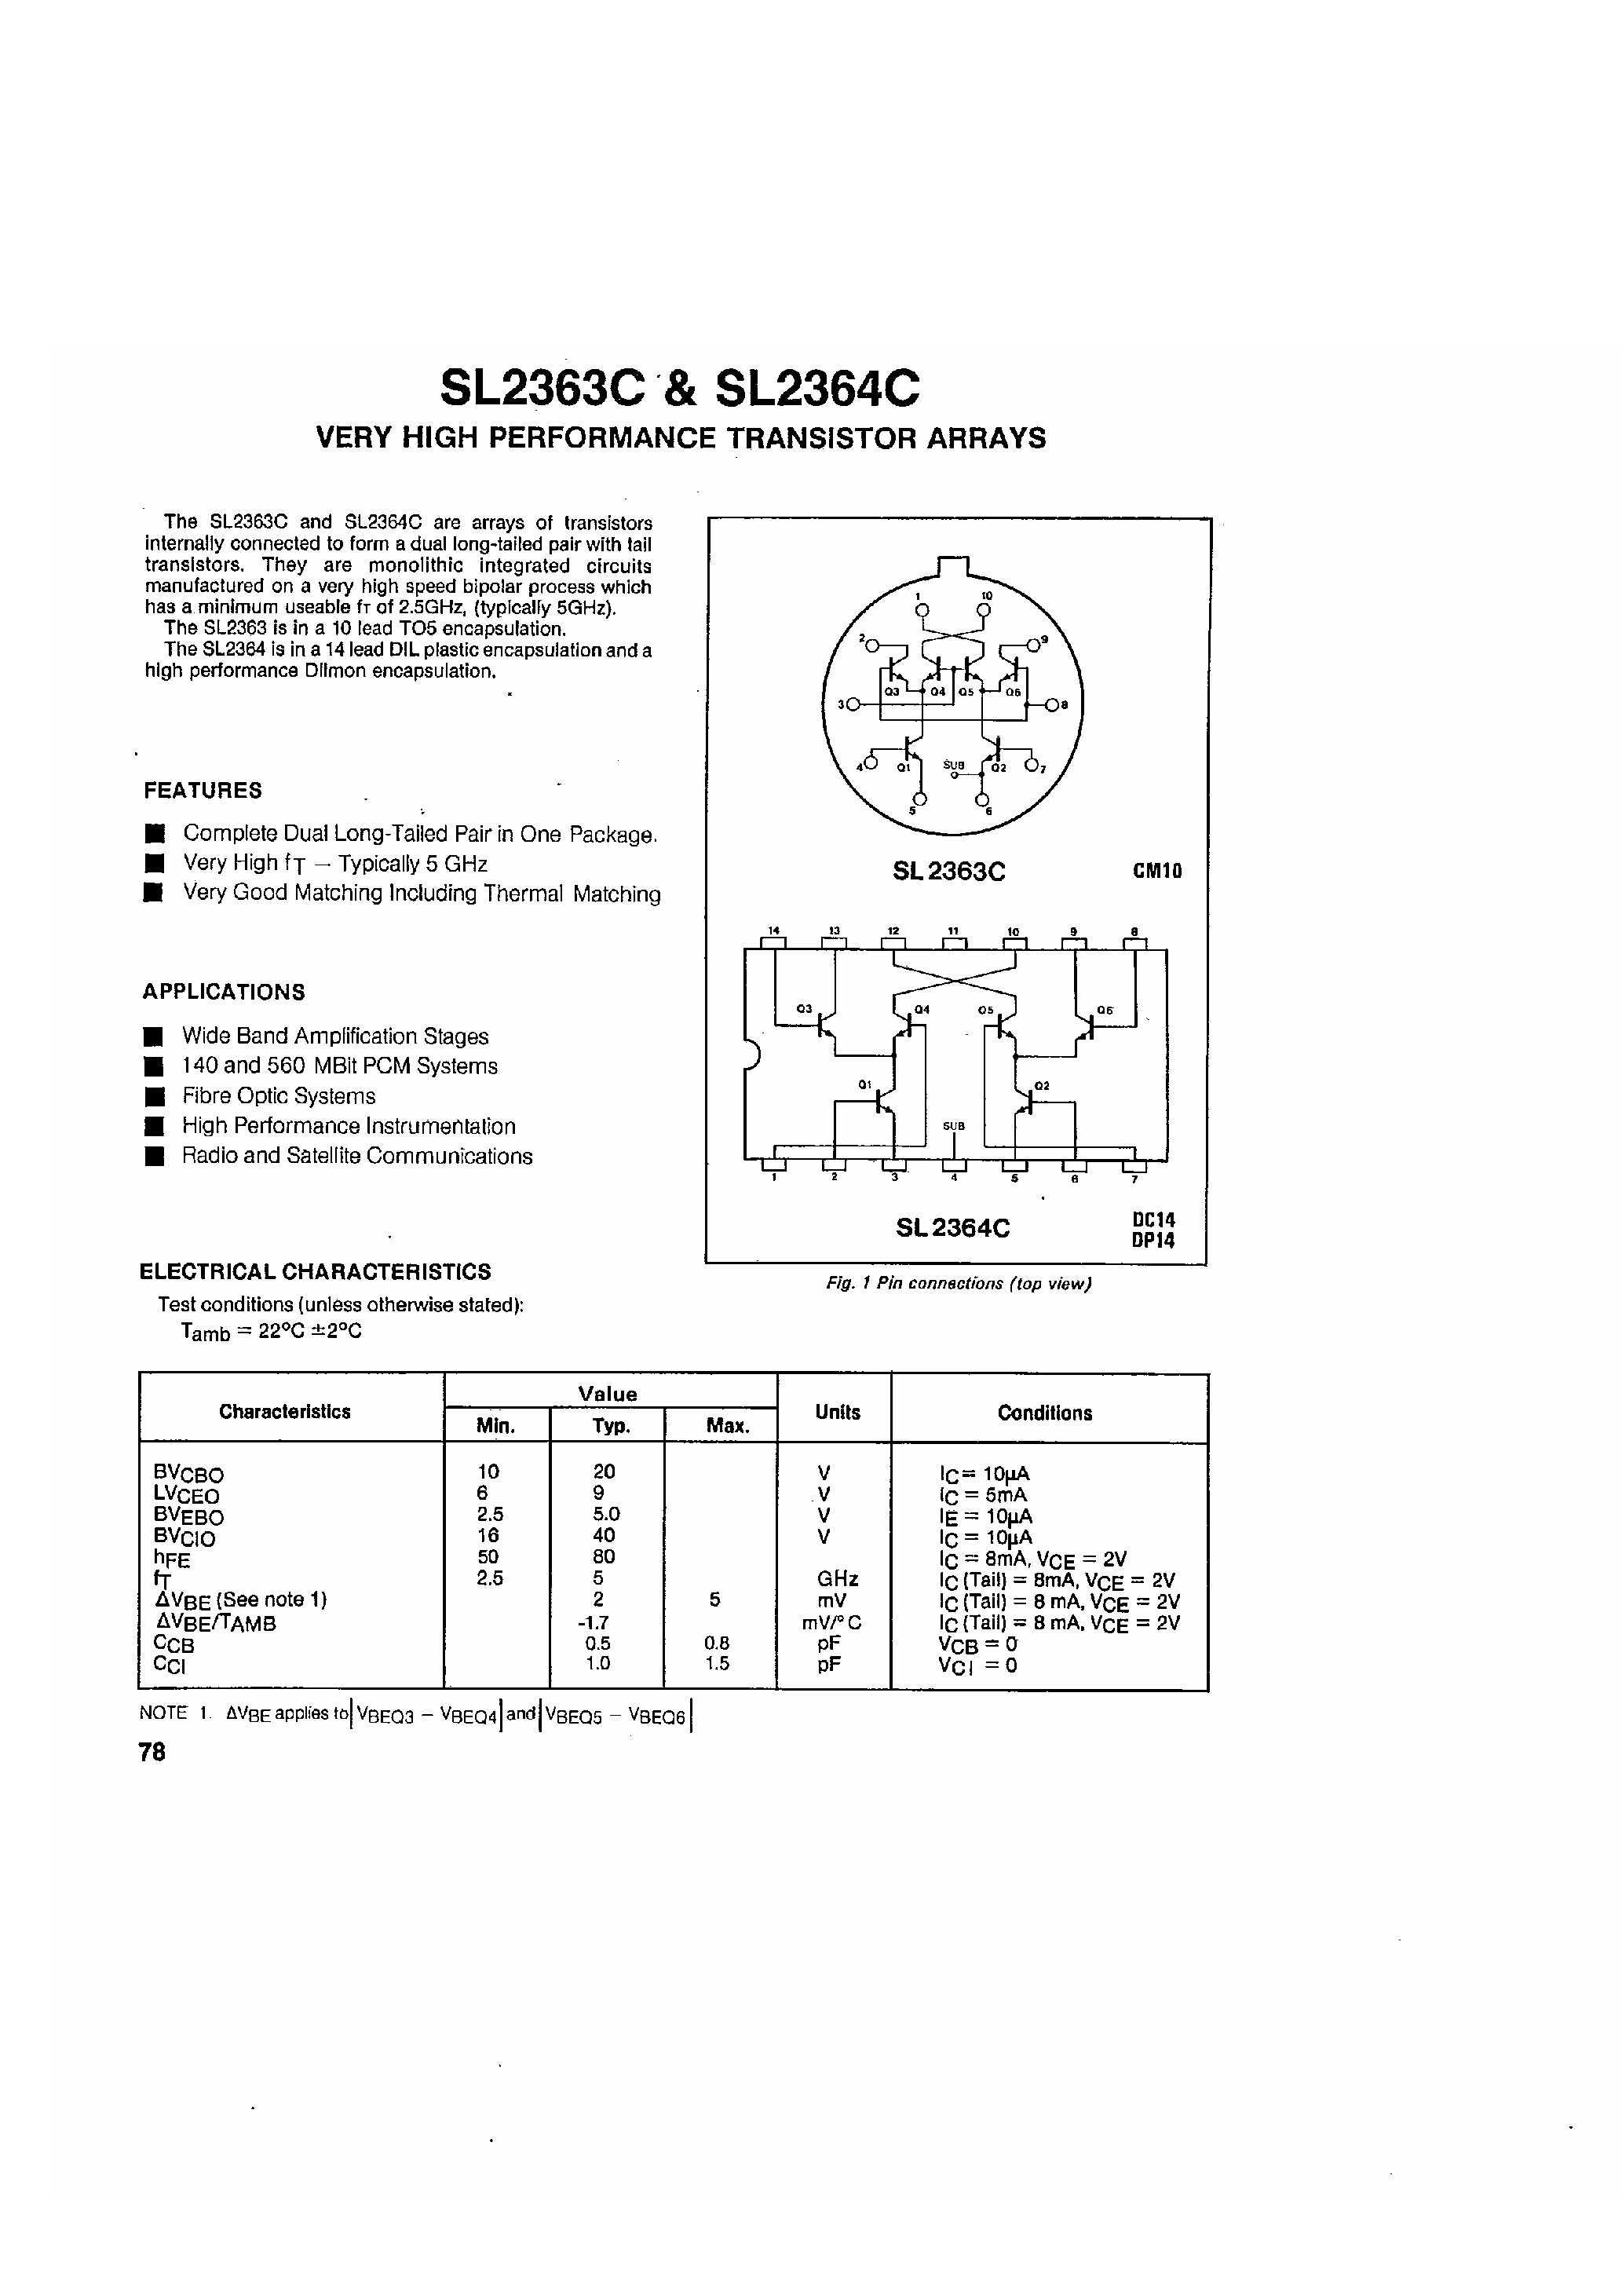 Даташит SL2364C - (SL2363C) Very High Performance Transistor Arrays страница 1